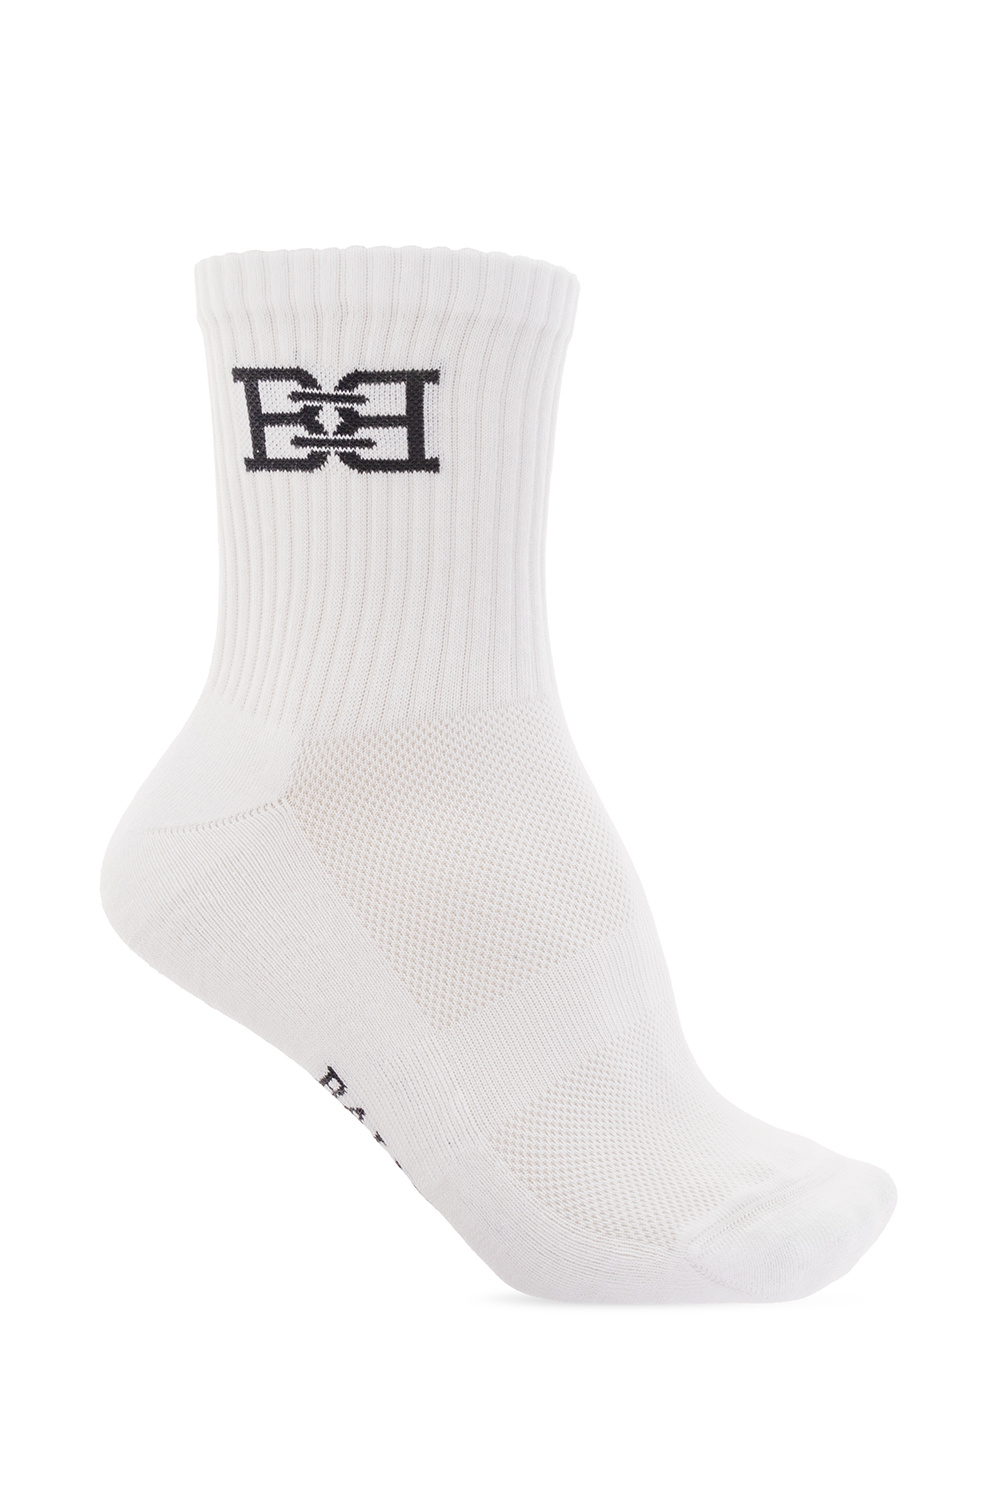 Bally Socks with logo